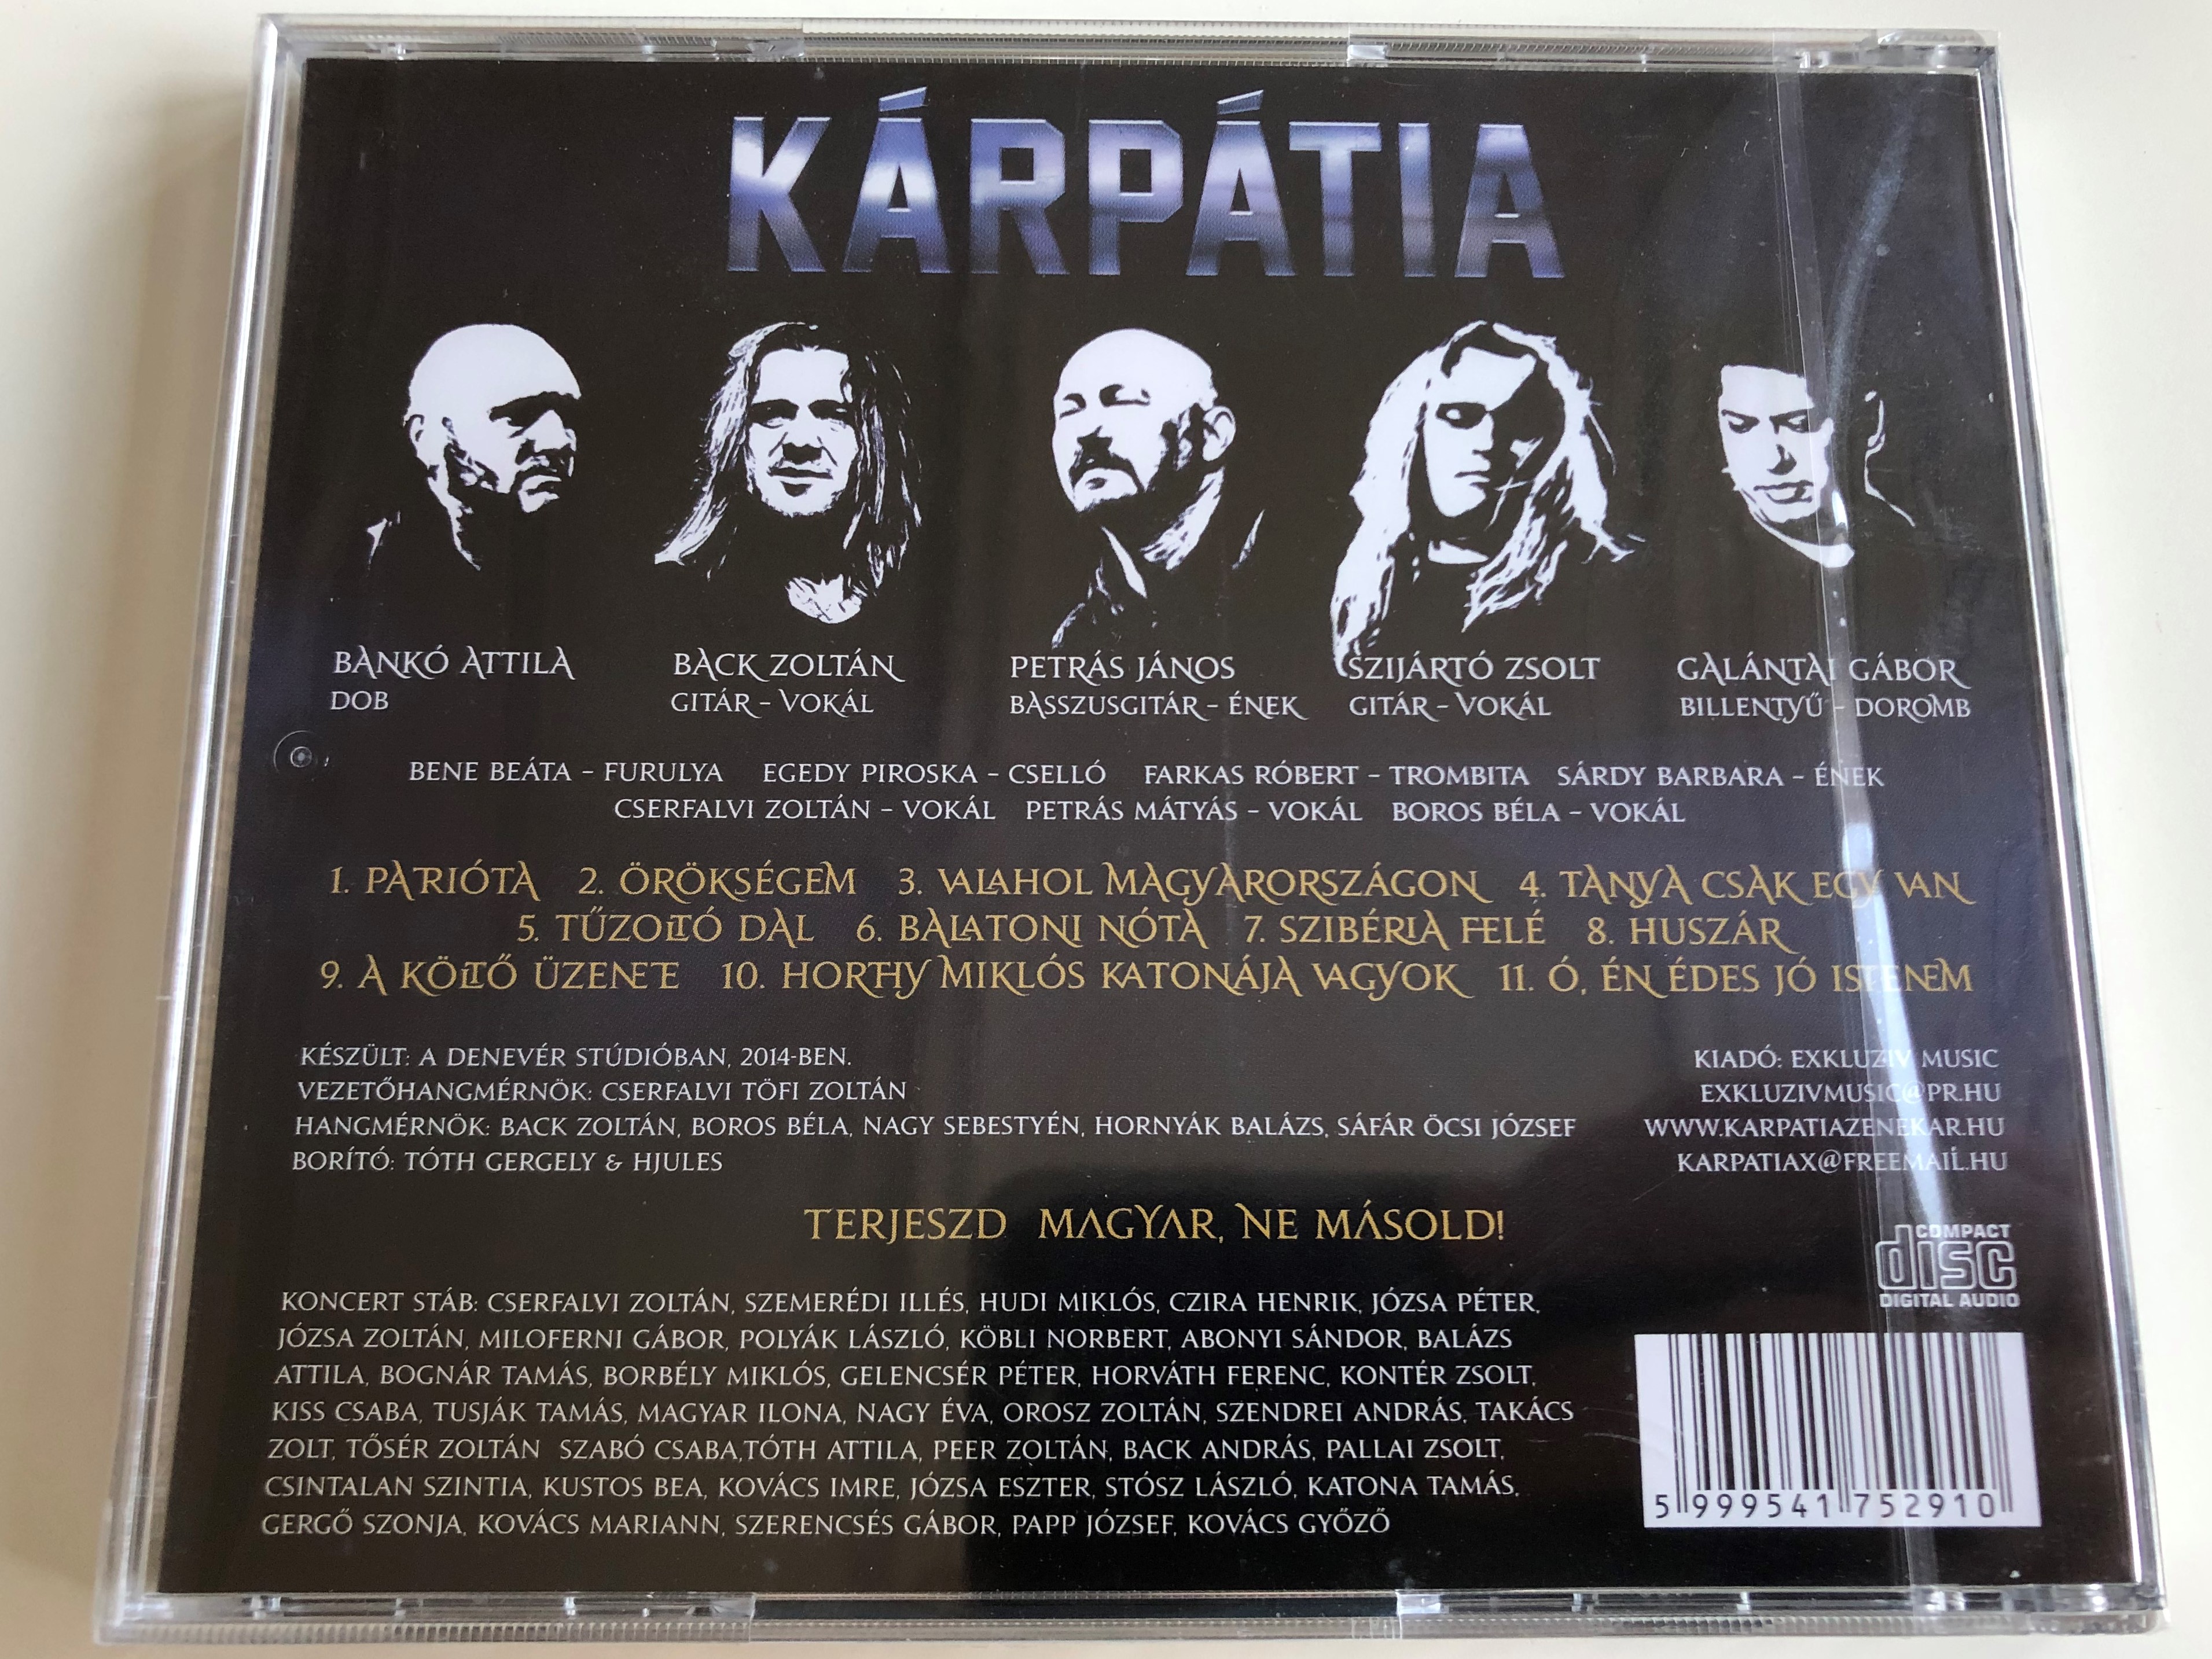 k-rp-tia-b-trak-a-szerencse-audio-cd-2014-patri-ta-r-ks-gem-balatoni-n-ta-husz-r-a-k-lt-zenete-exkluziv-music-2-.jpg